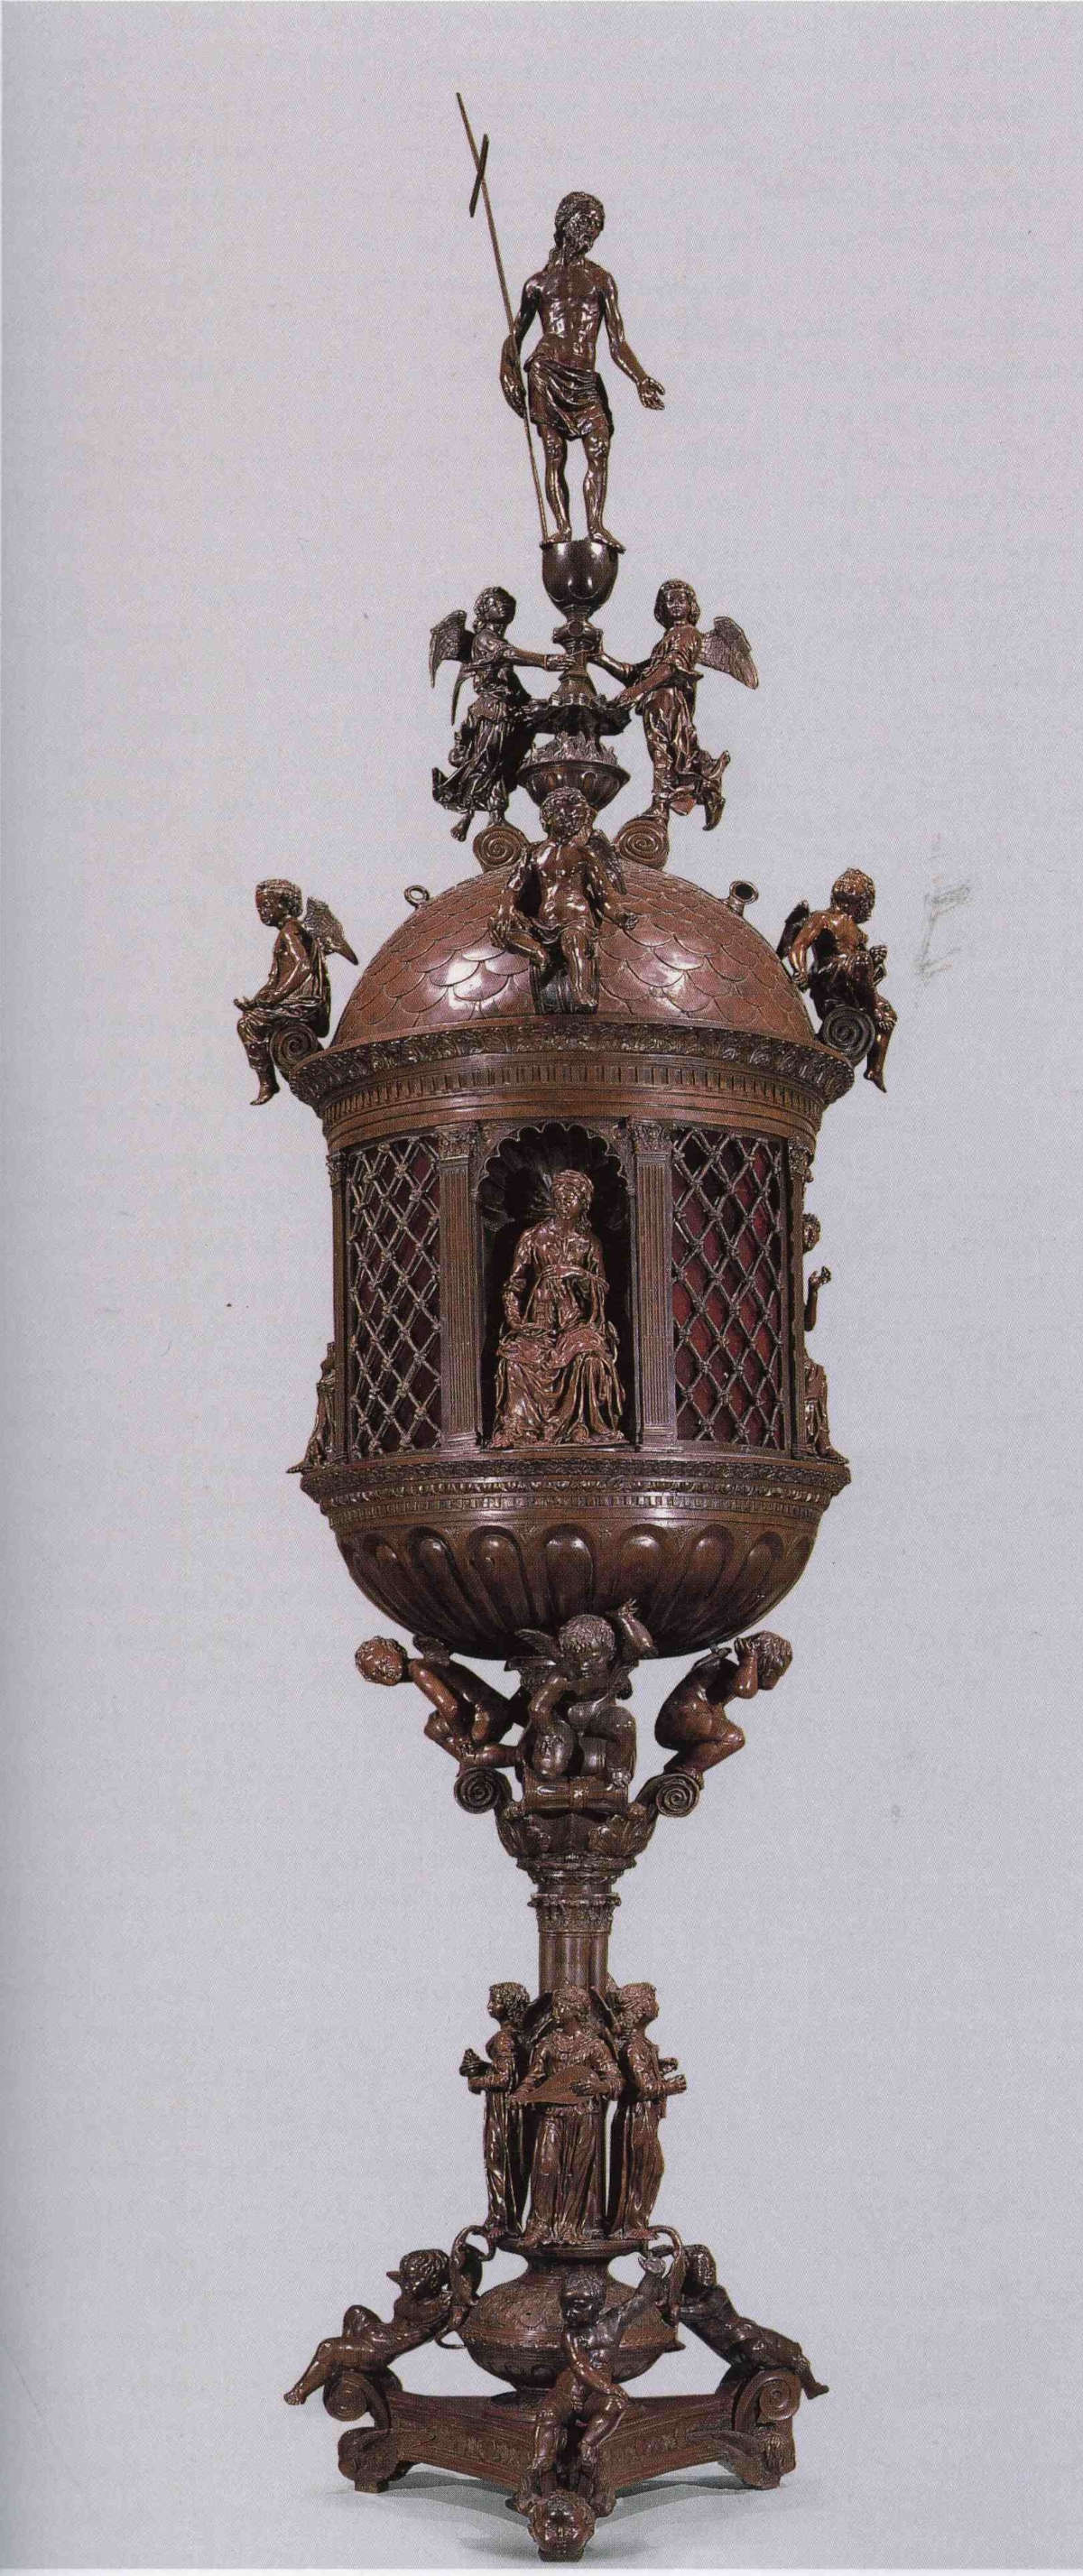 Vecchietta, tabernacle eucharistique (1467-1472 ; bronze ; Sienne, cathédrale)